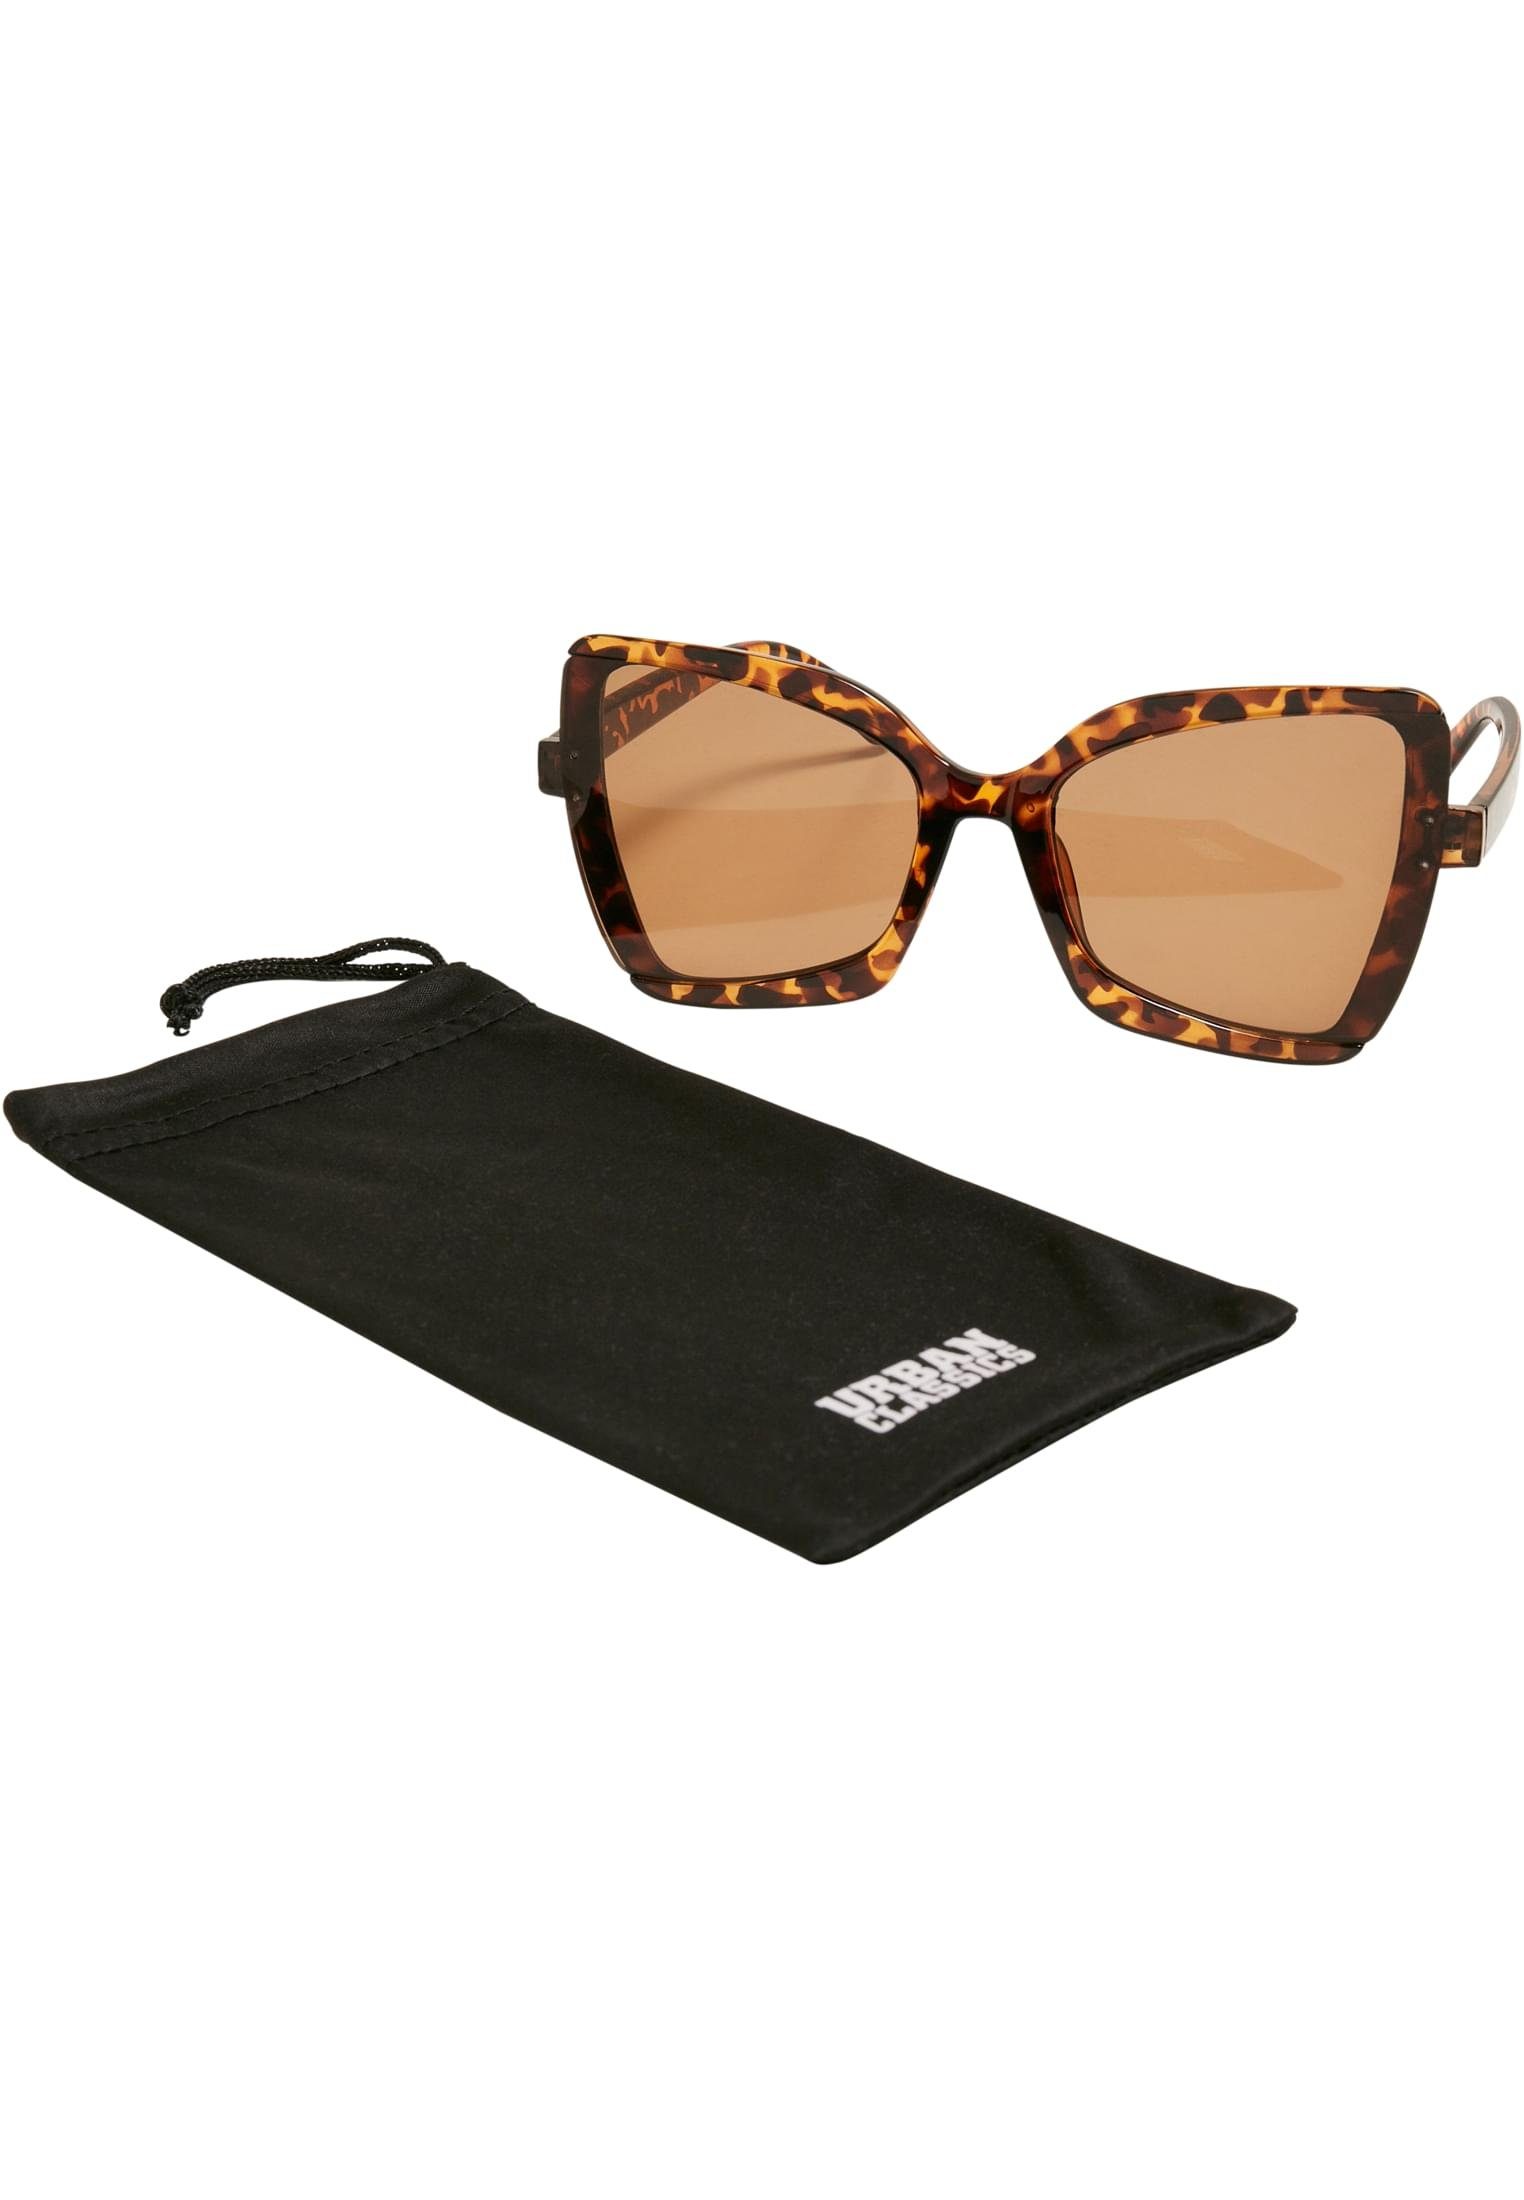 URBAN CLASSICS Sonnenbrille Unisex Sunglasses Mississippi brown